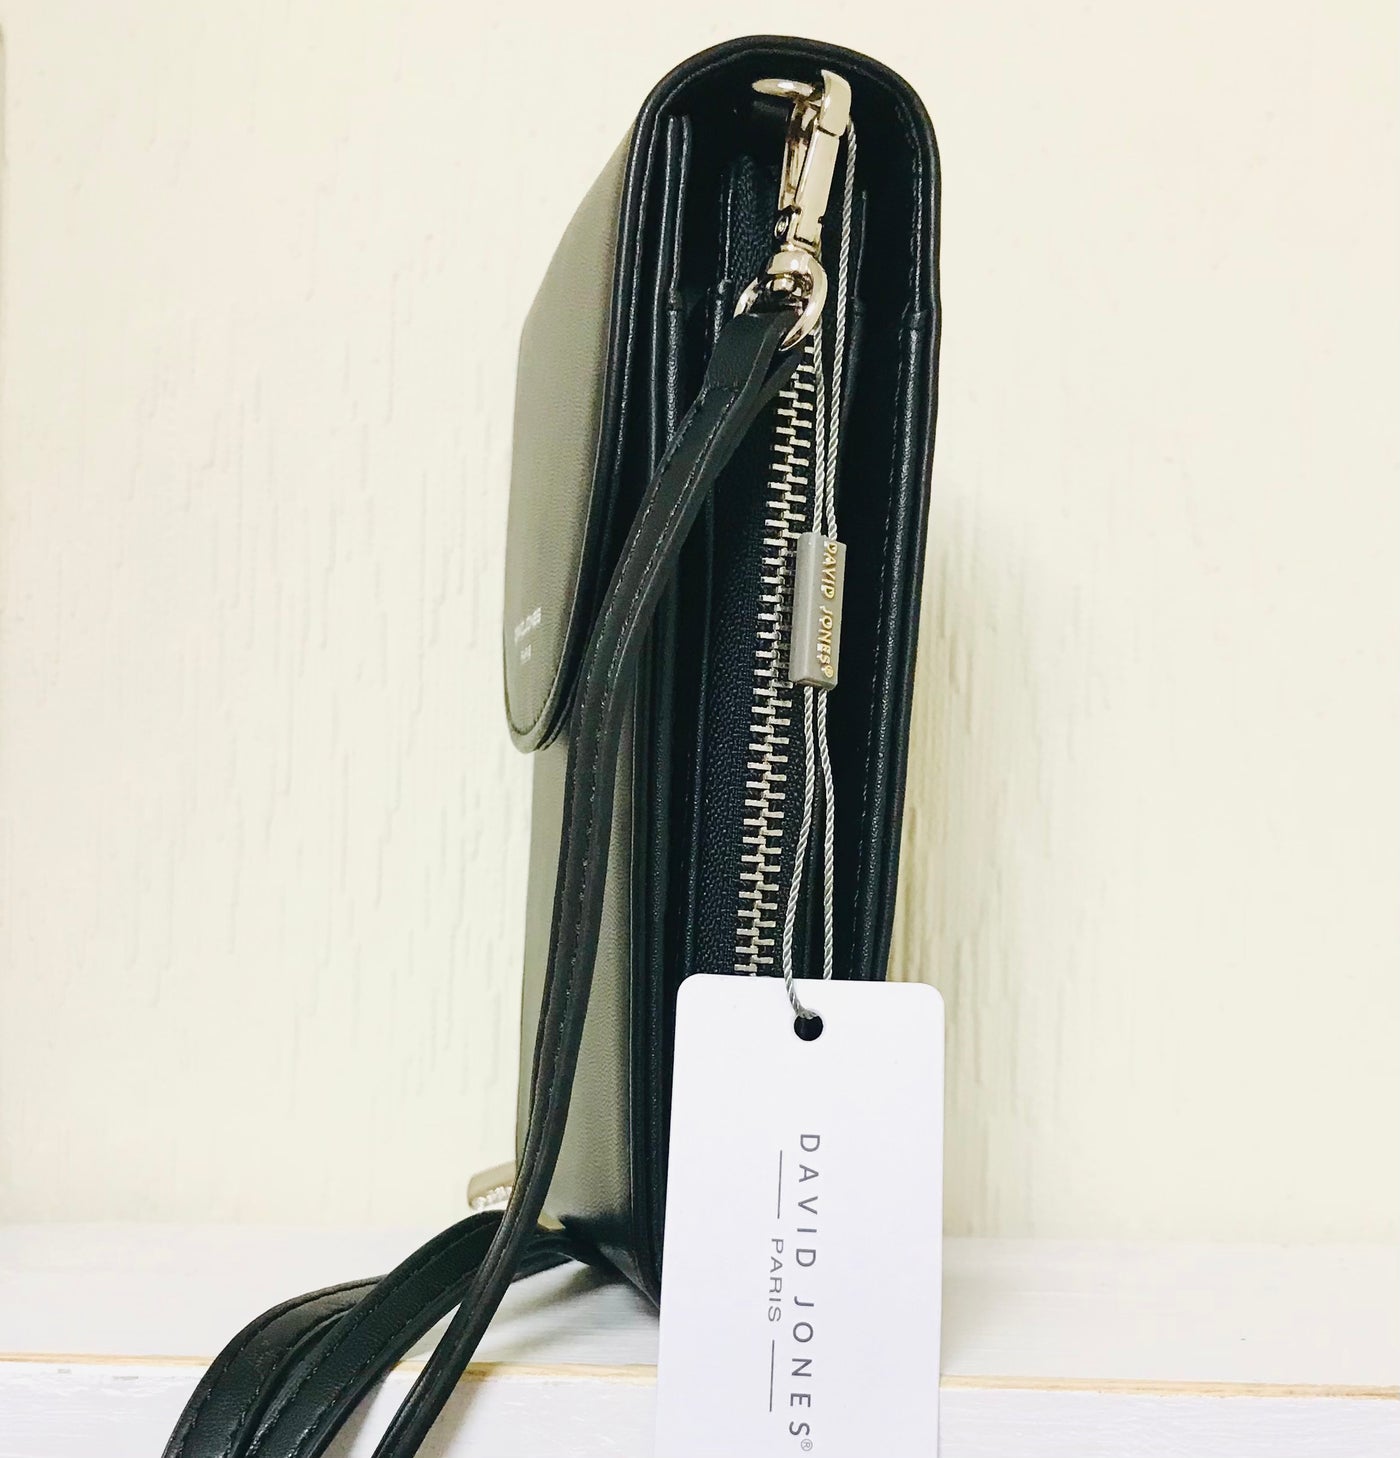 David Jones Phone Crossbody Handbag - Black – Jolu Accessories Boutique